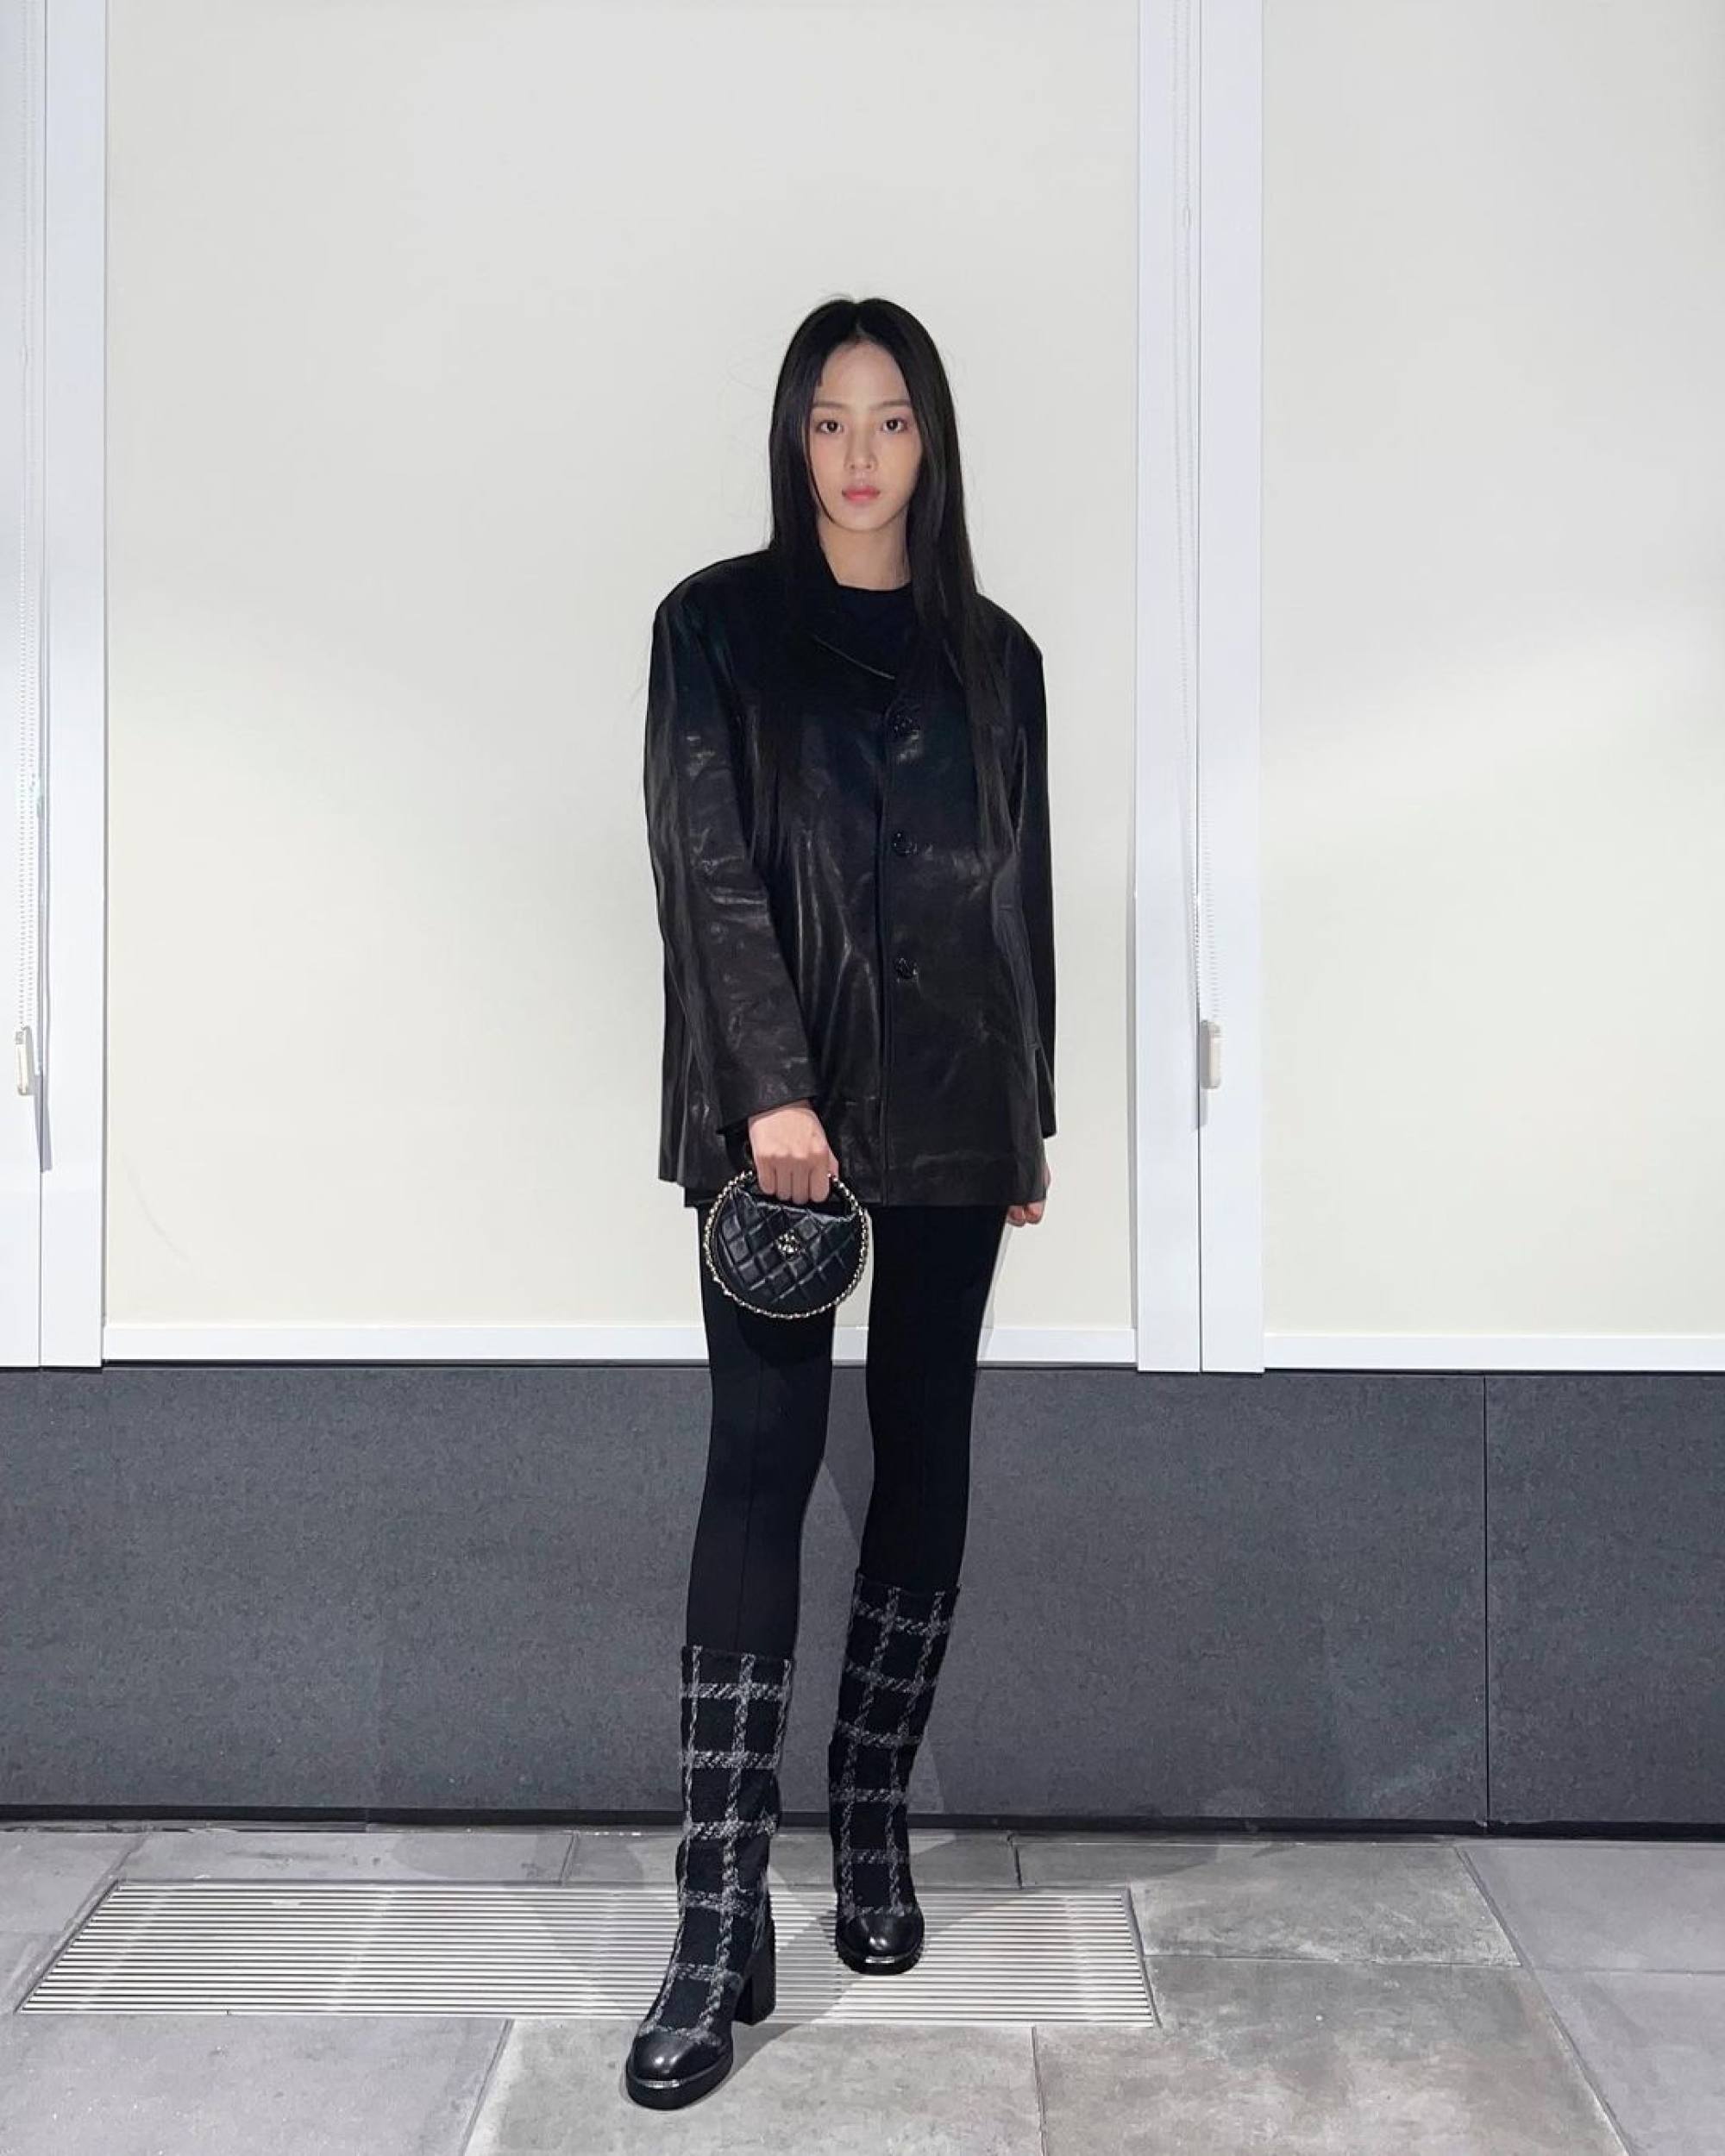 NewJeans' Minji Becomes Chanel's Global Ambassador